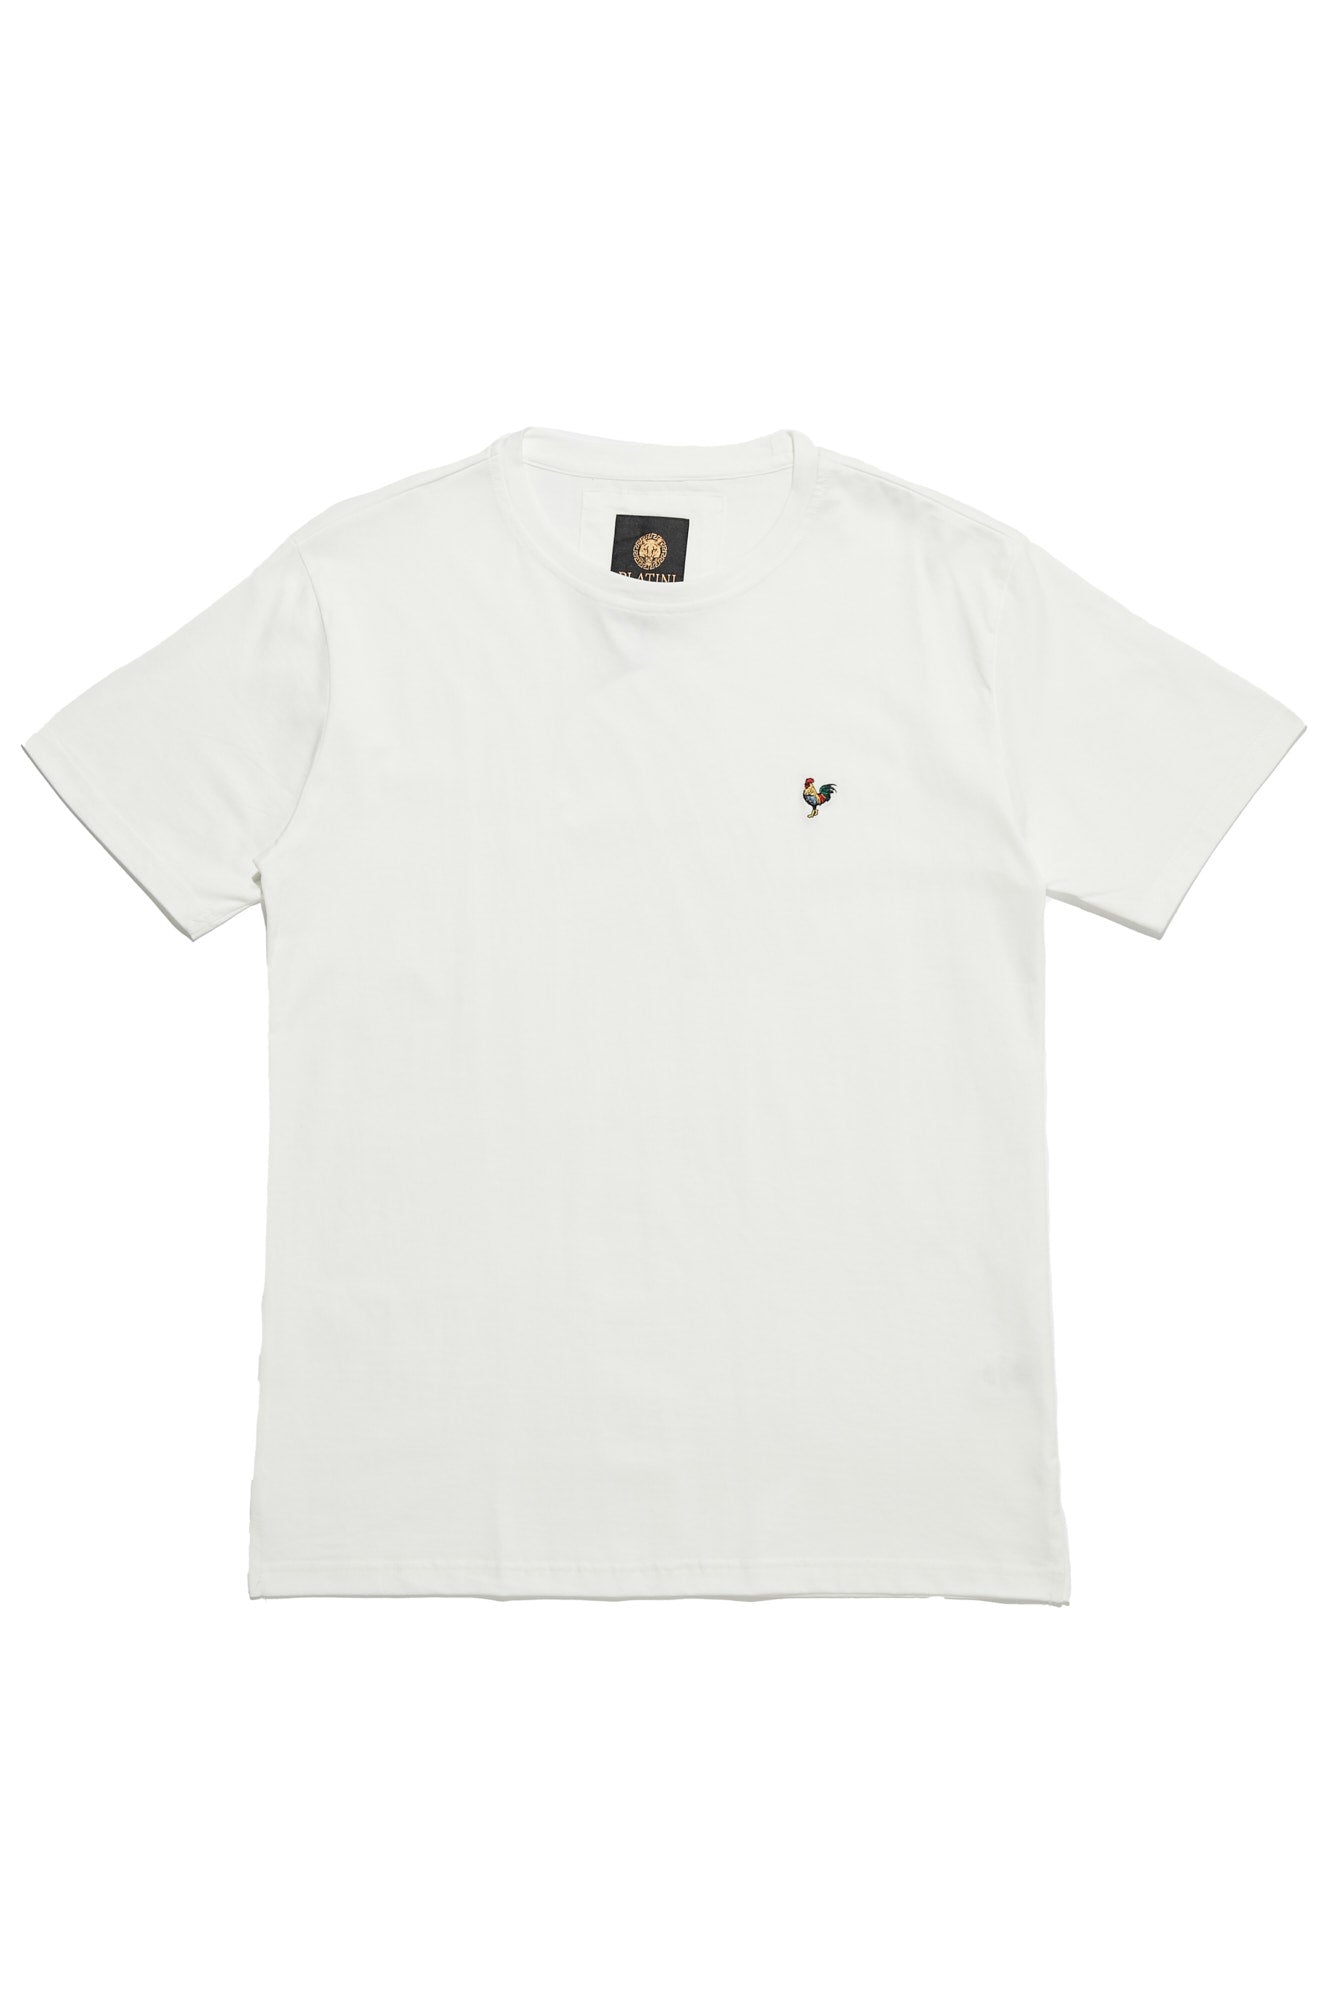 Mens Modern Fit Premium Cotton Rooster Logo T-Shirt